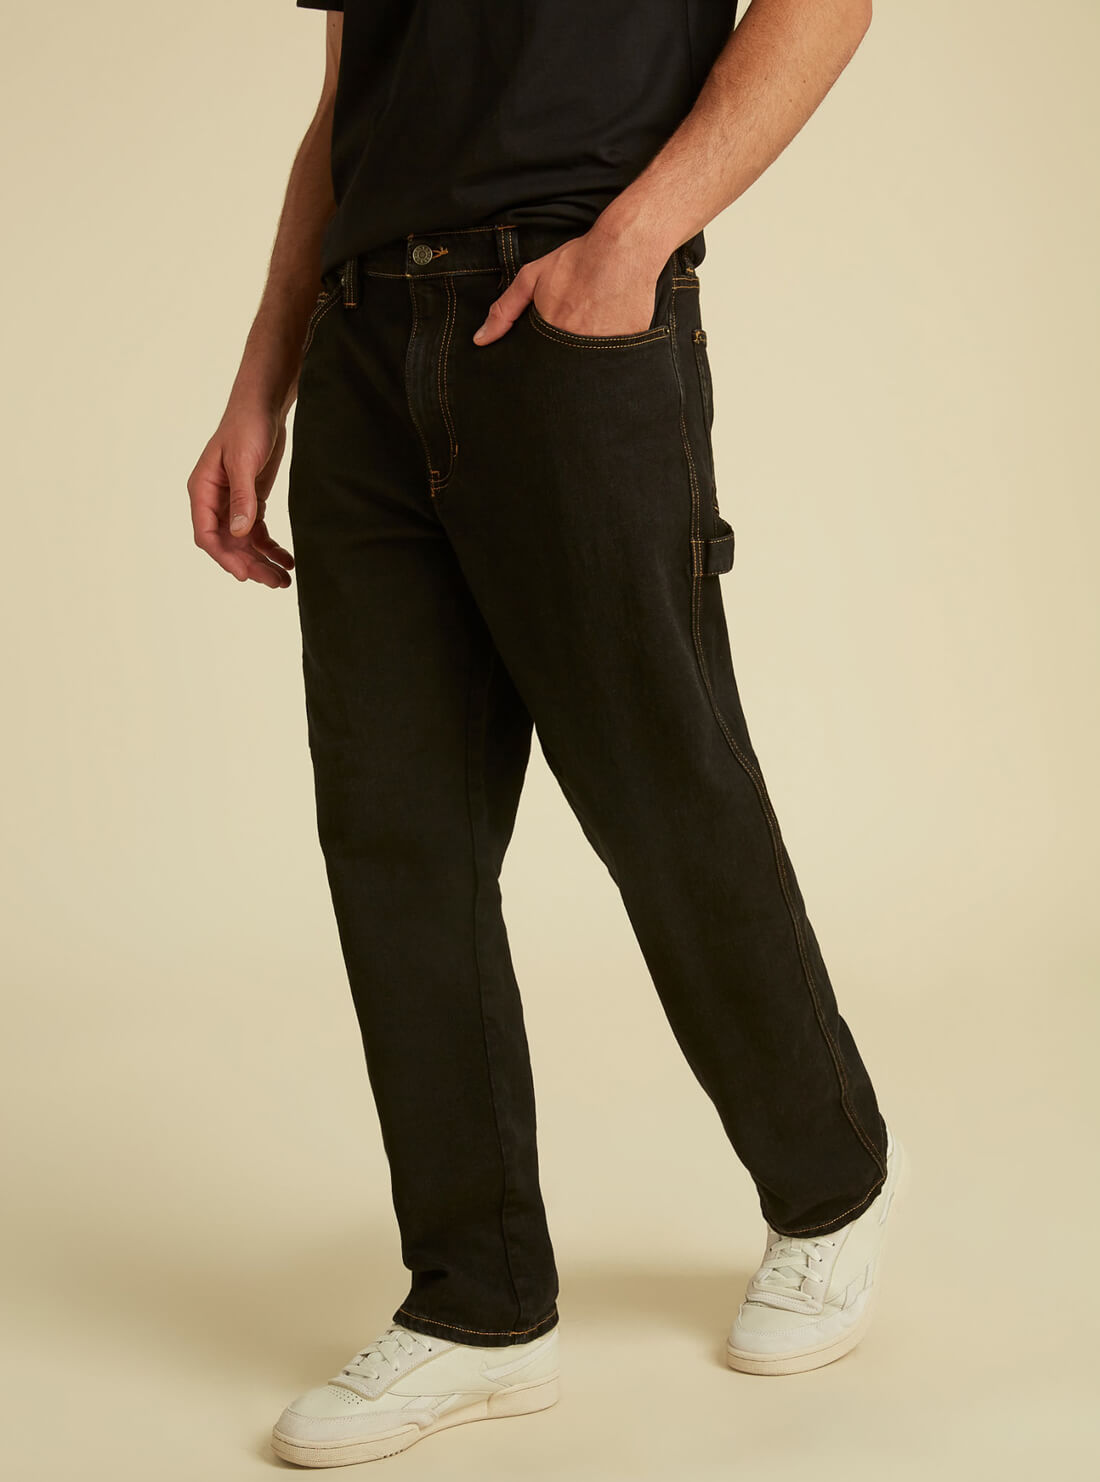 GUESS Mens GUESS Originals Straight Fit Carpenter Denim Jeans in Vintage Black Wash M1GA06R4AS0 Model Side View